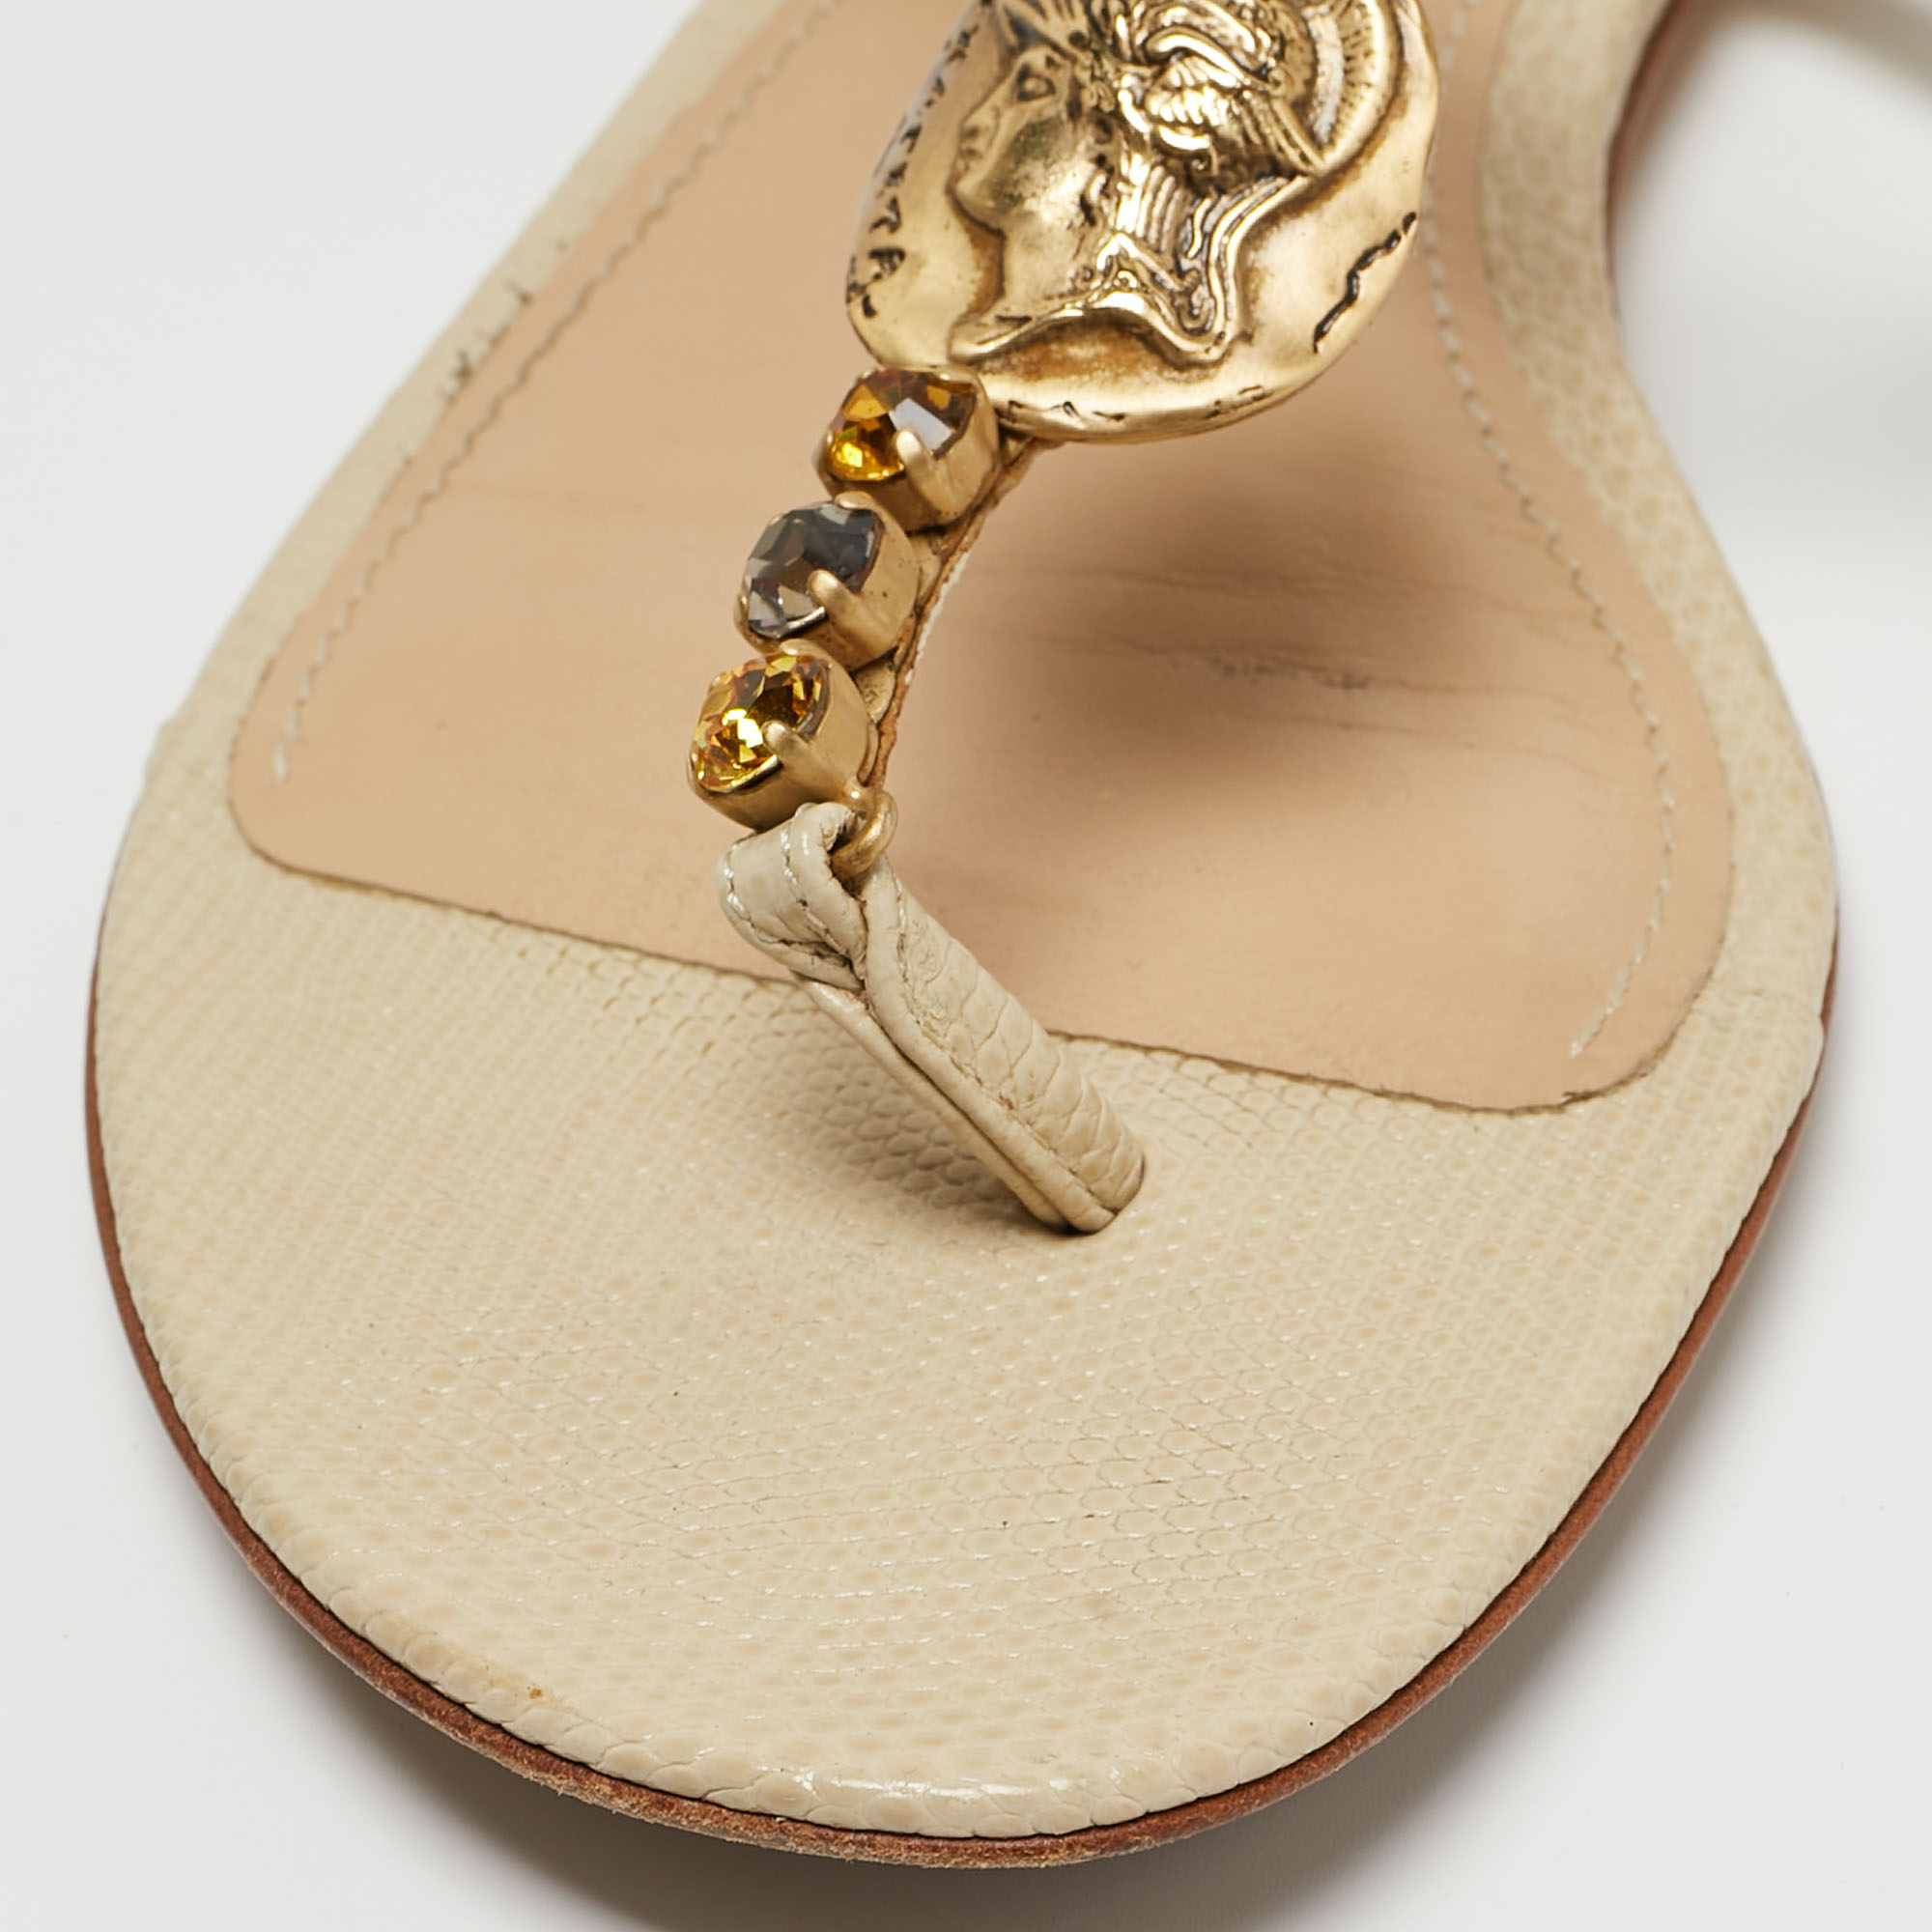 Dolce & Gabbana Beige Textured Leather Crystal Embellished Thong Flat Sandals Size 39.5